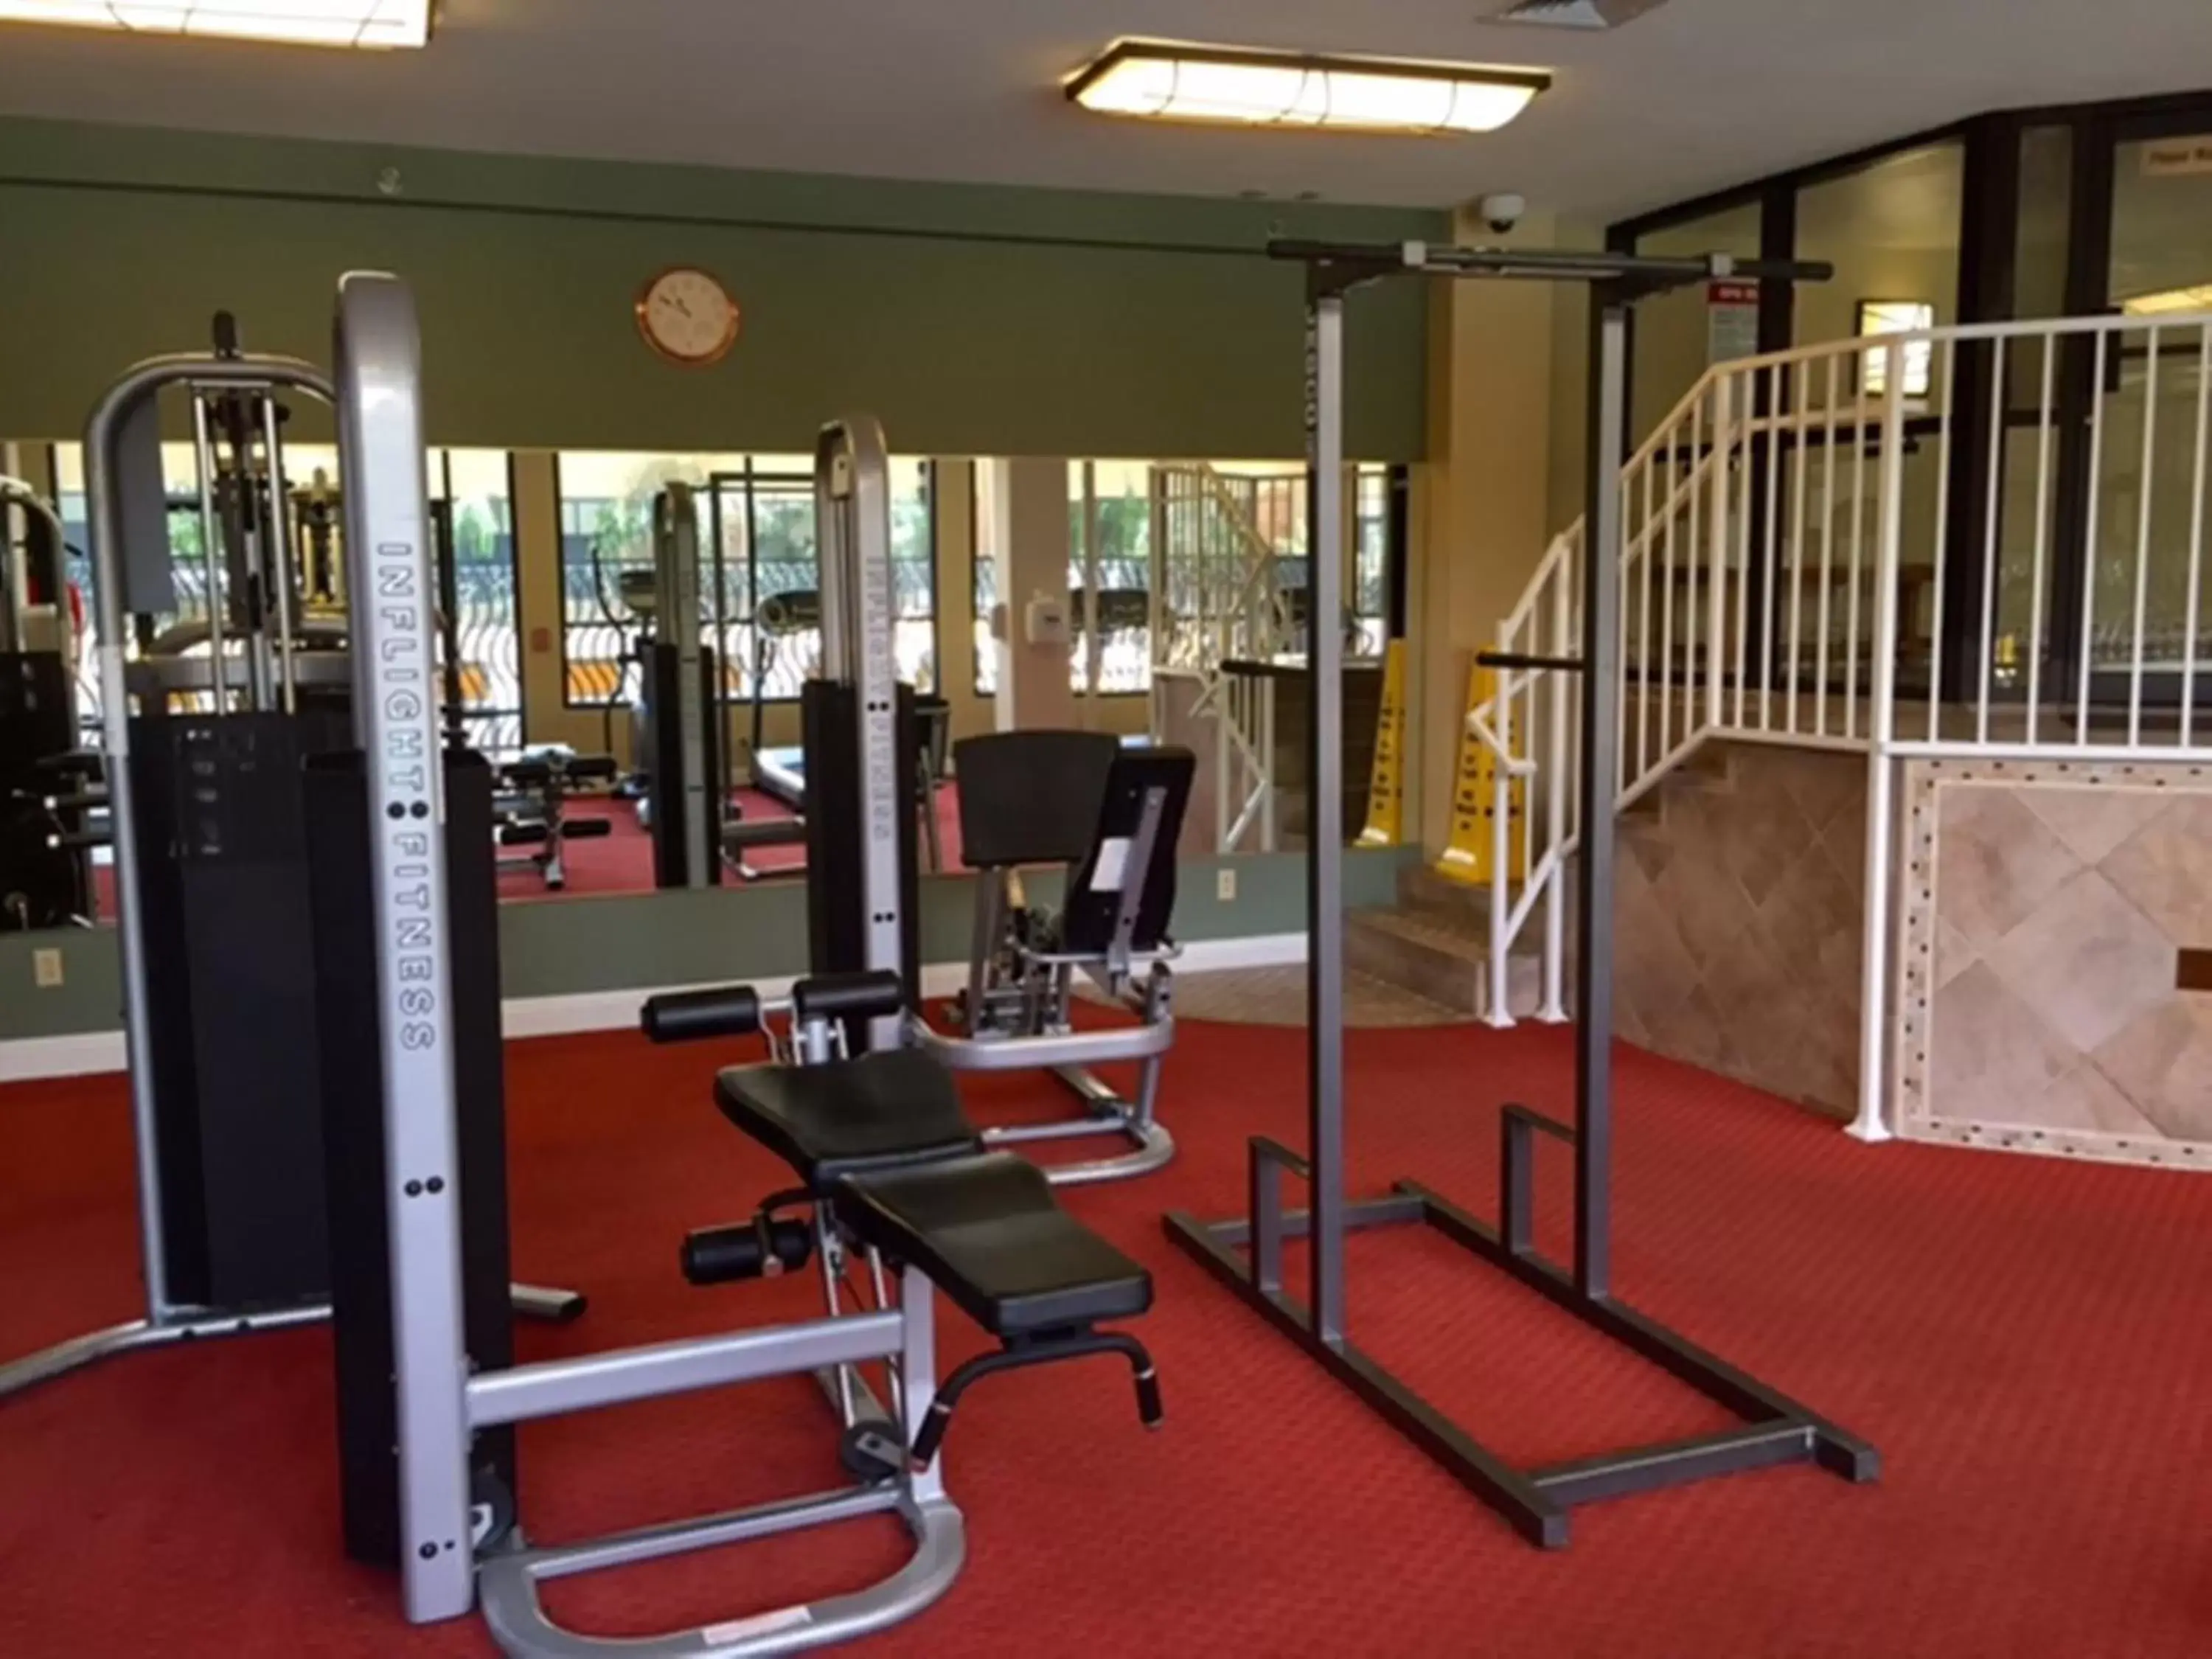 Fitness centre/facilities, Fitness Center/Facilities in GetAways at the Jockey Club